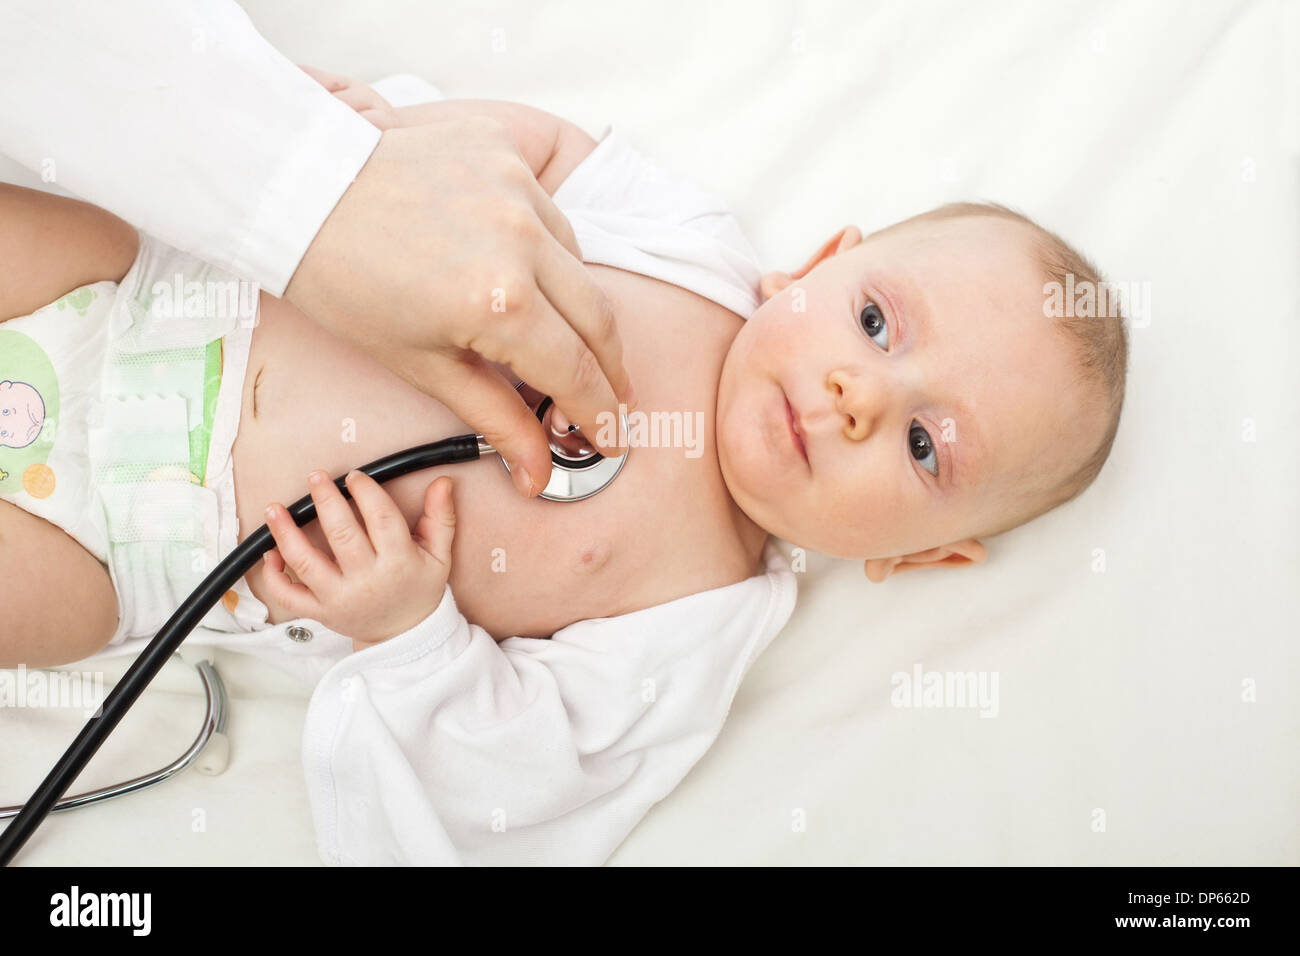 baby portrait and pediatrician check Stock Photo